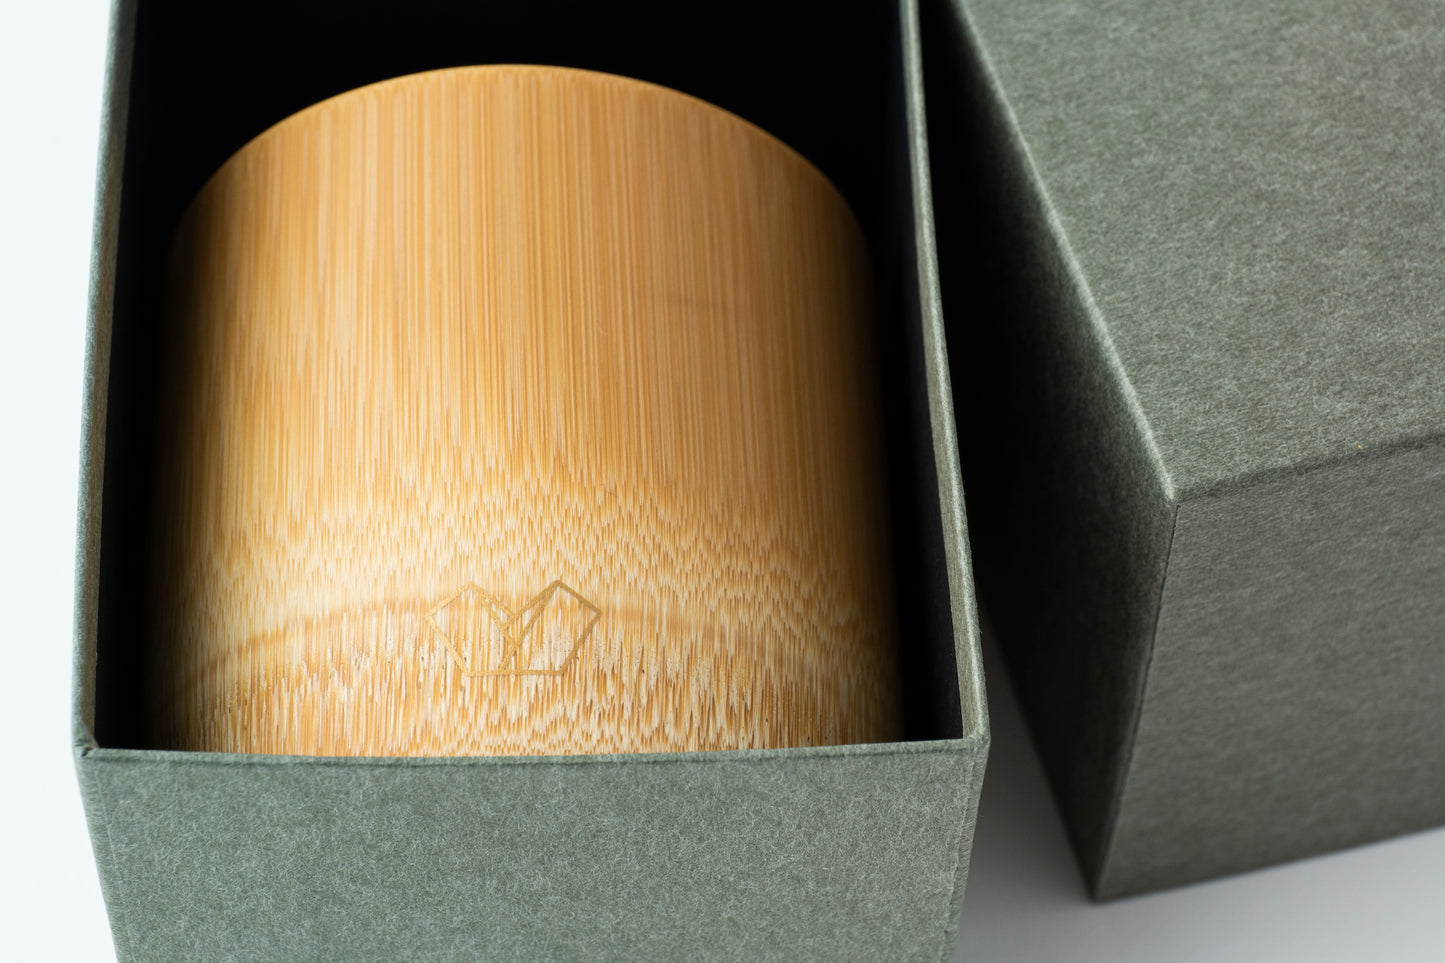 Bamboo Cup : Natural